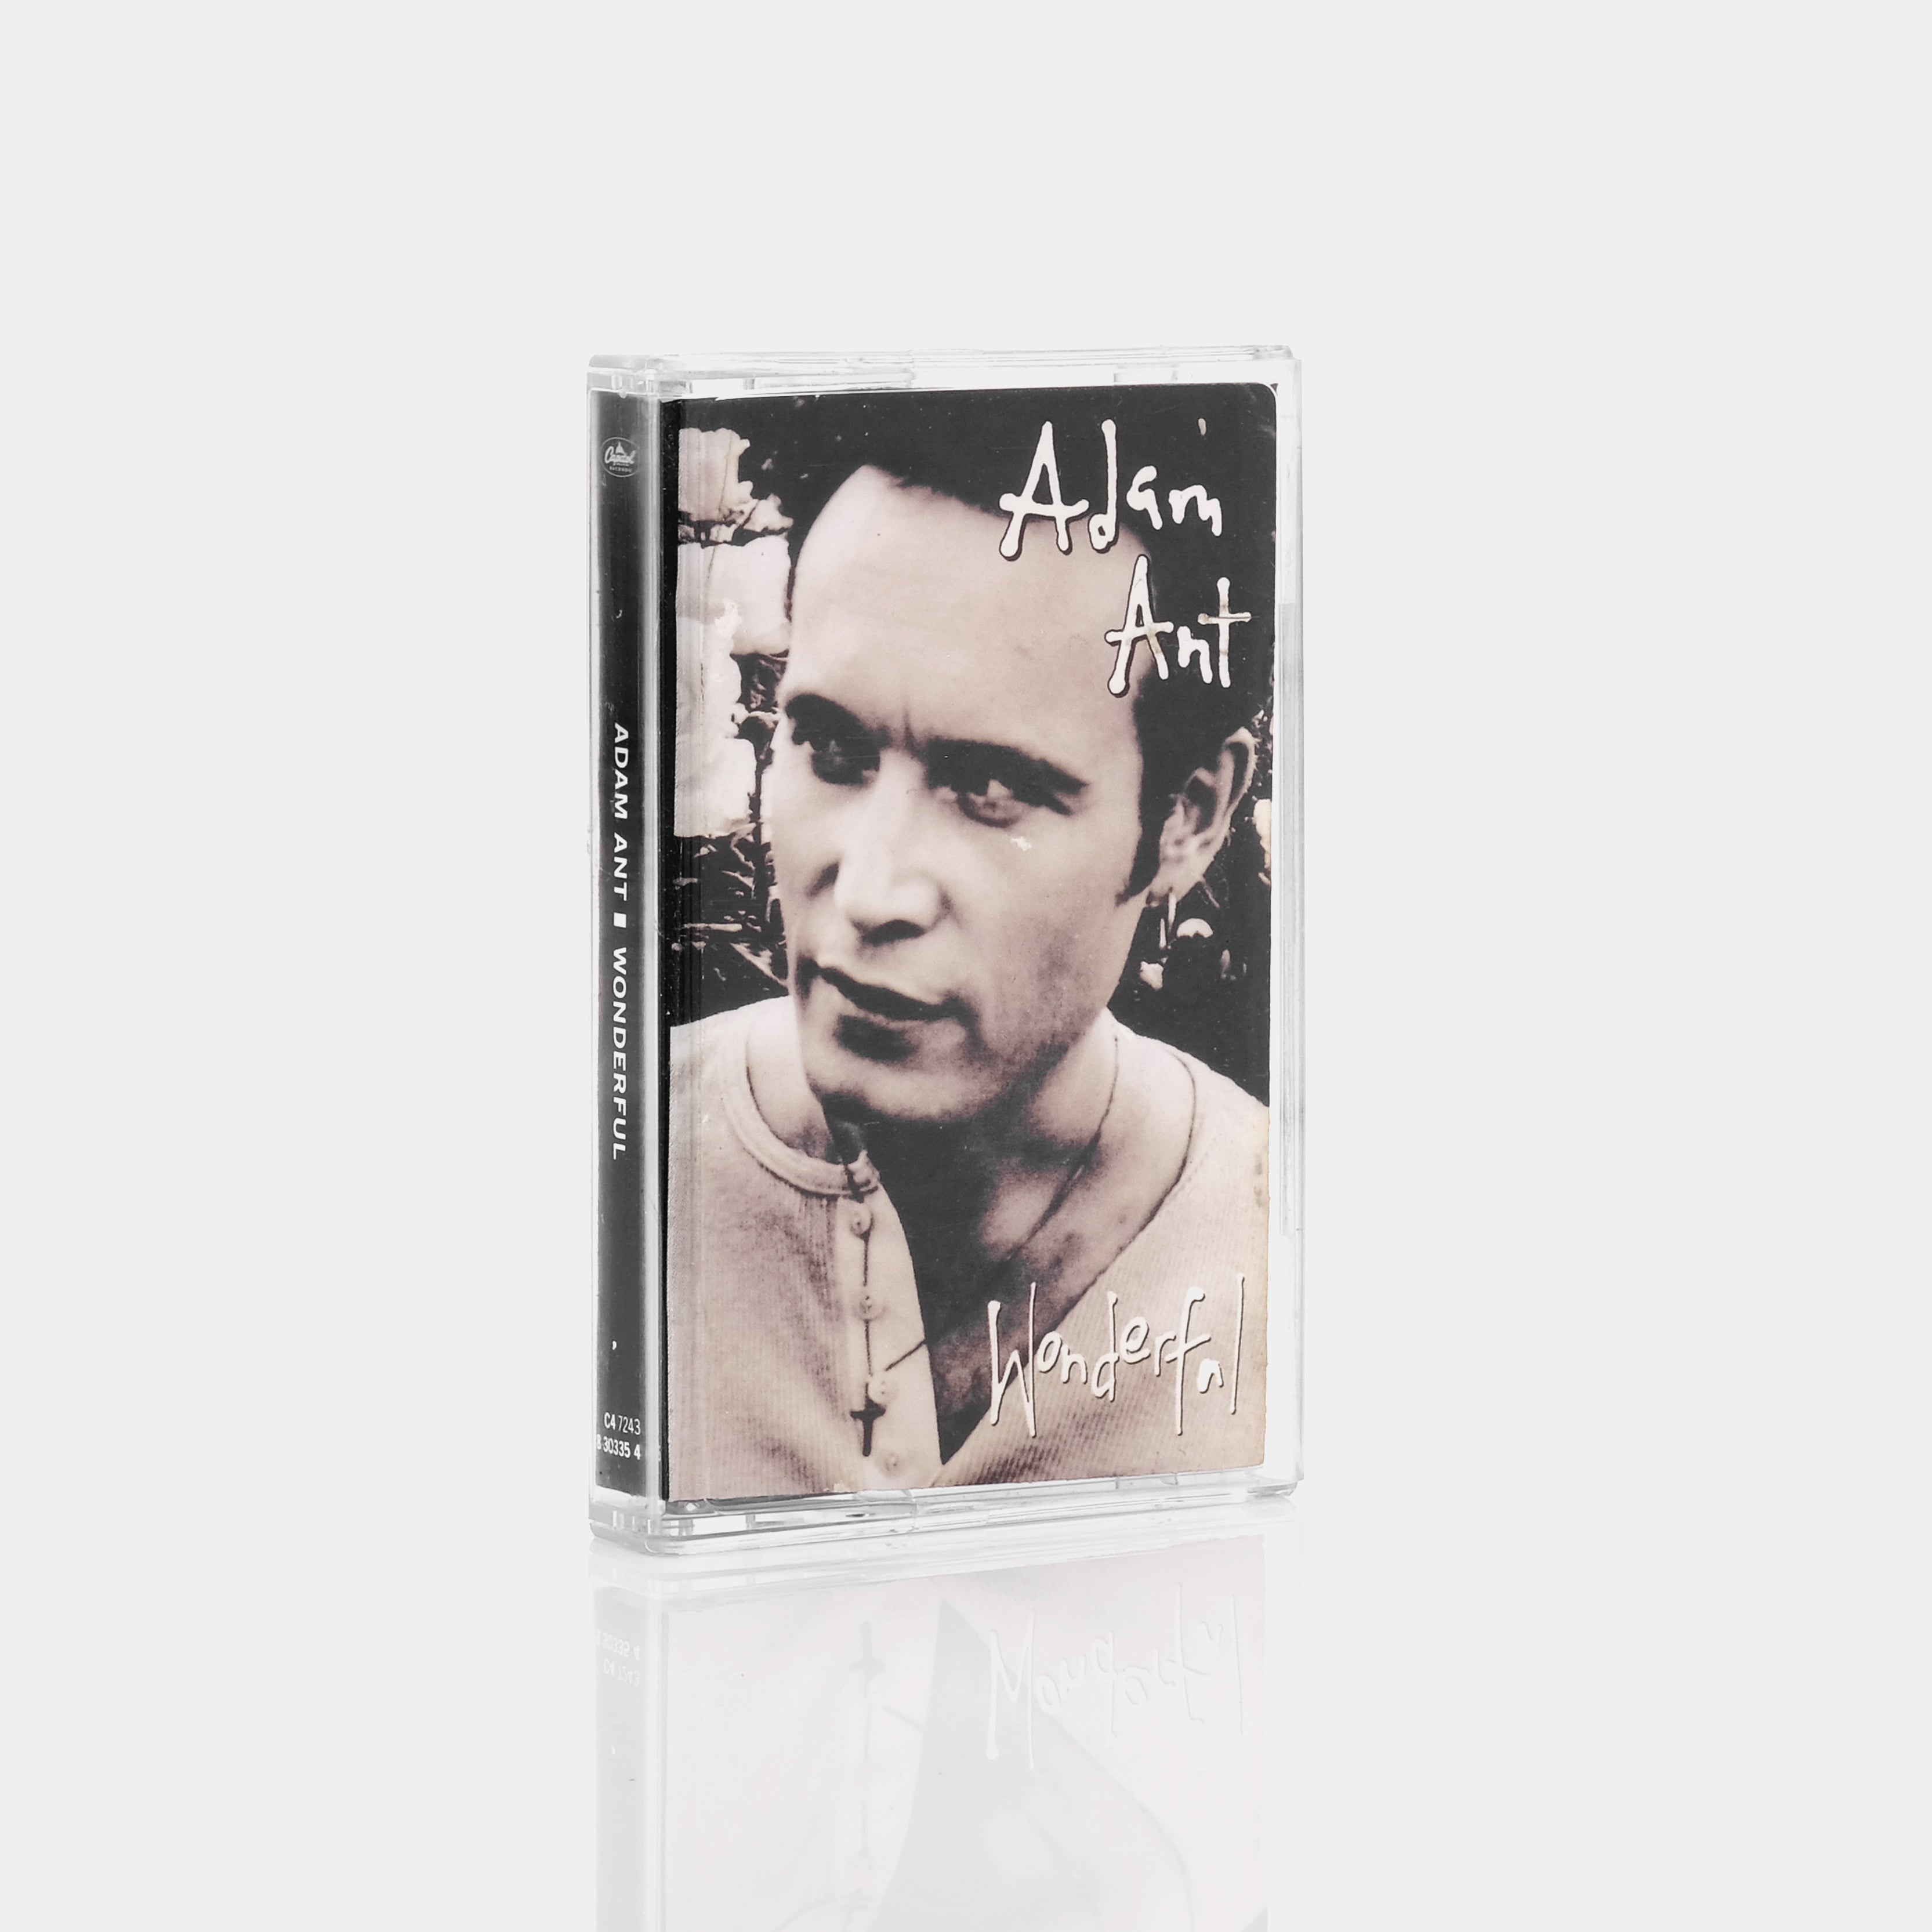 Adam Ant - Wonderful Cassette Tape